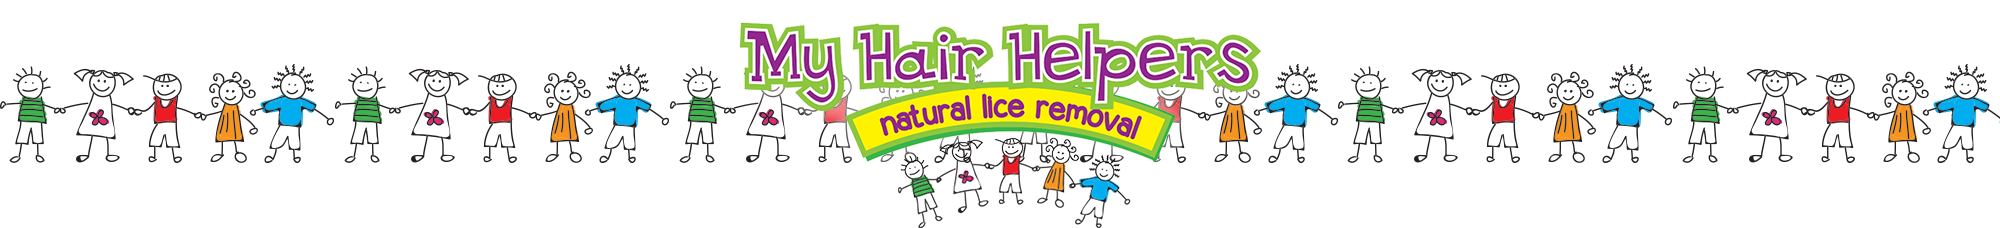 My Hair Helpers logo